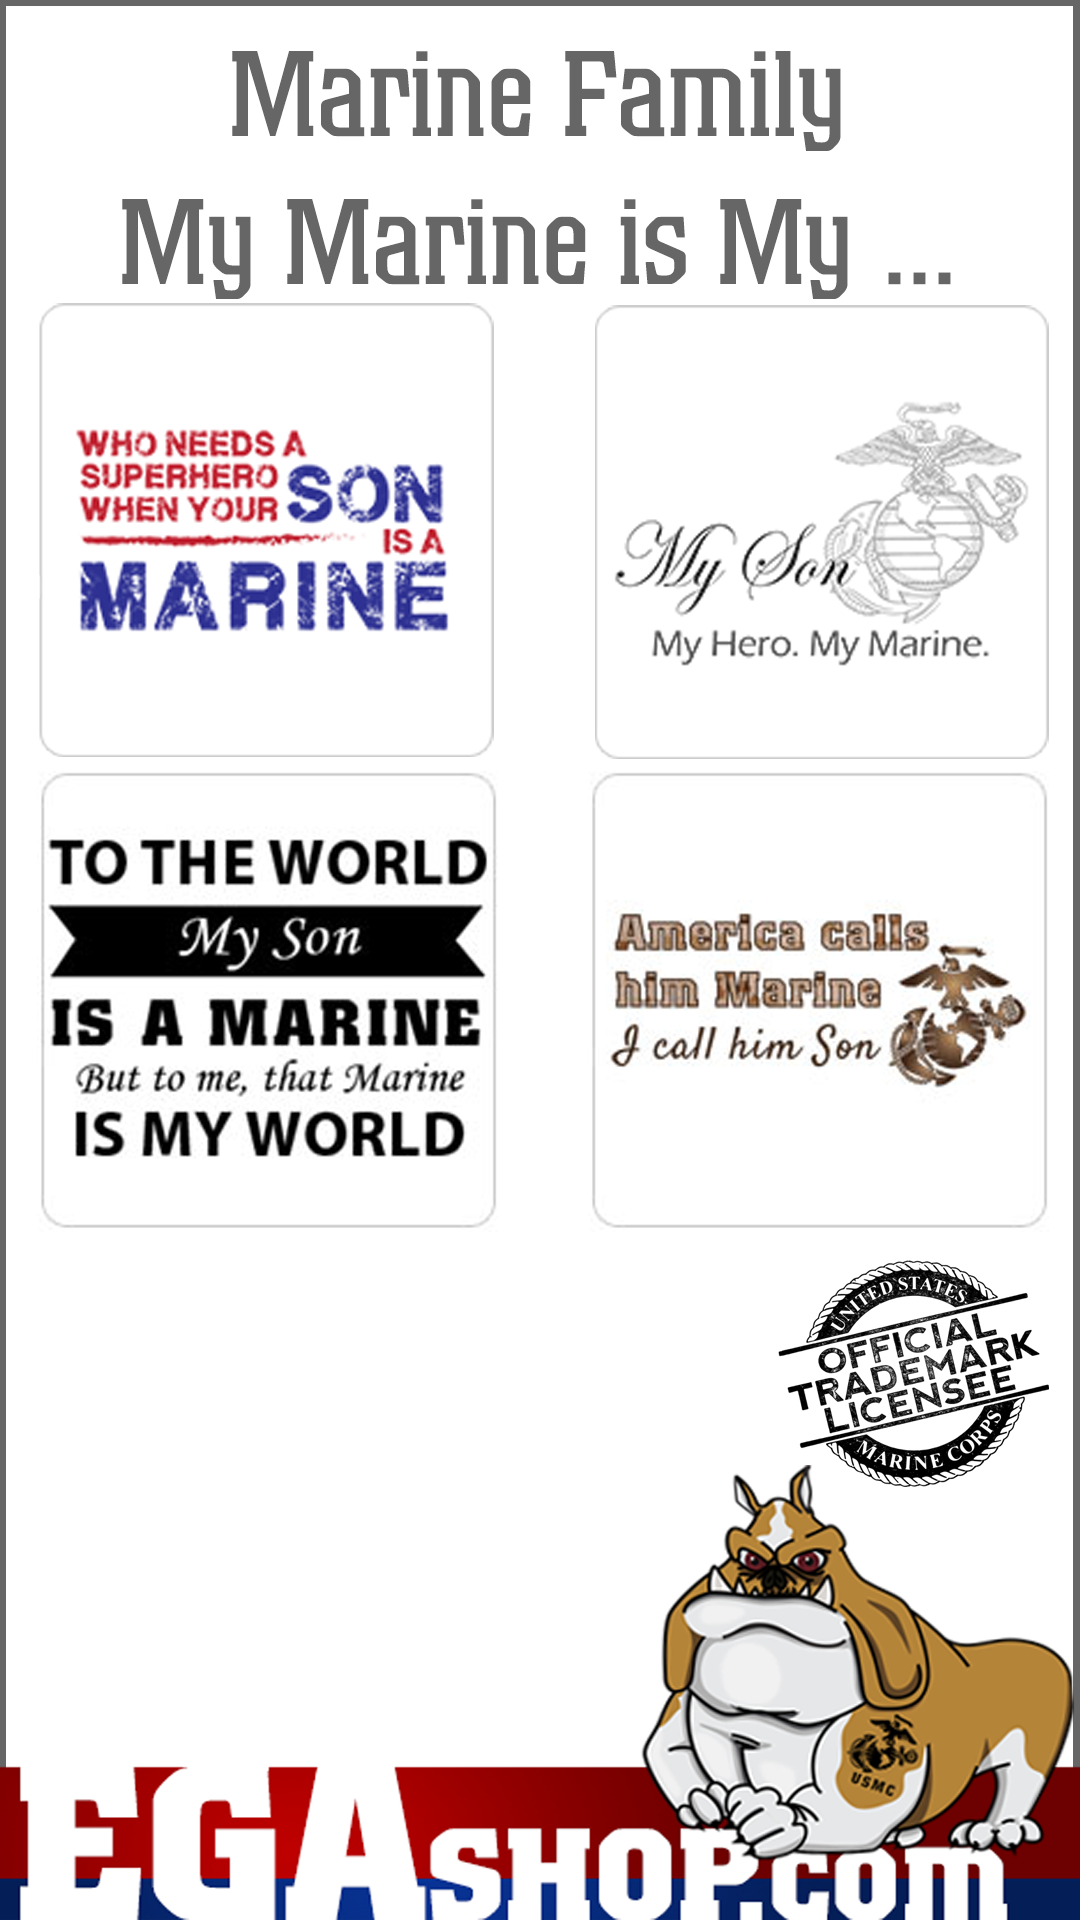 My Marine is My ...